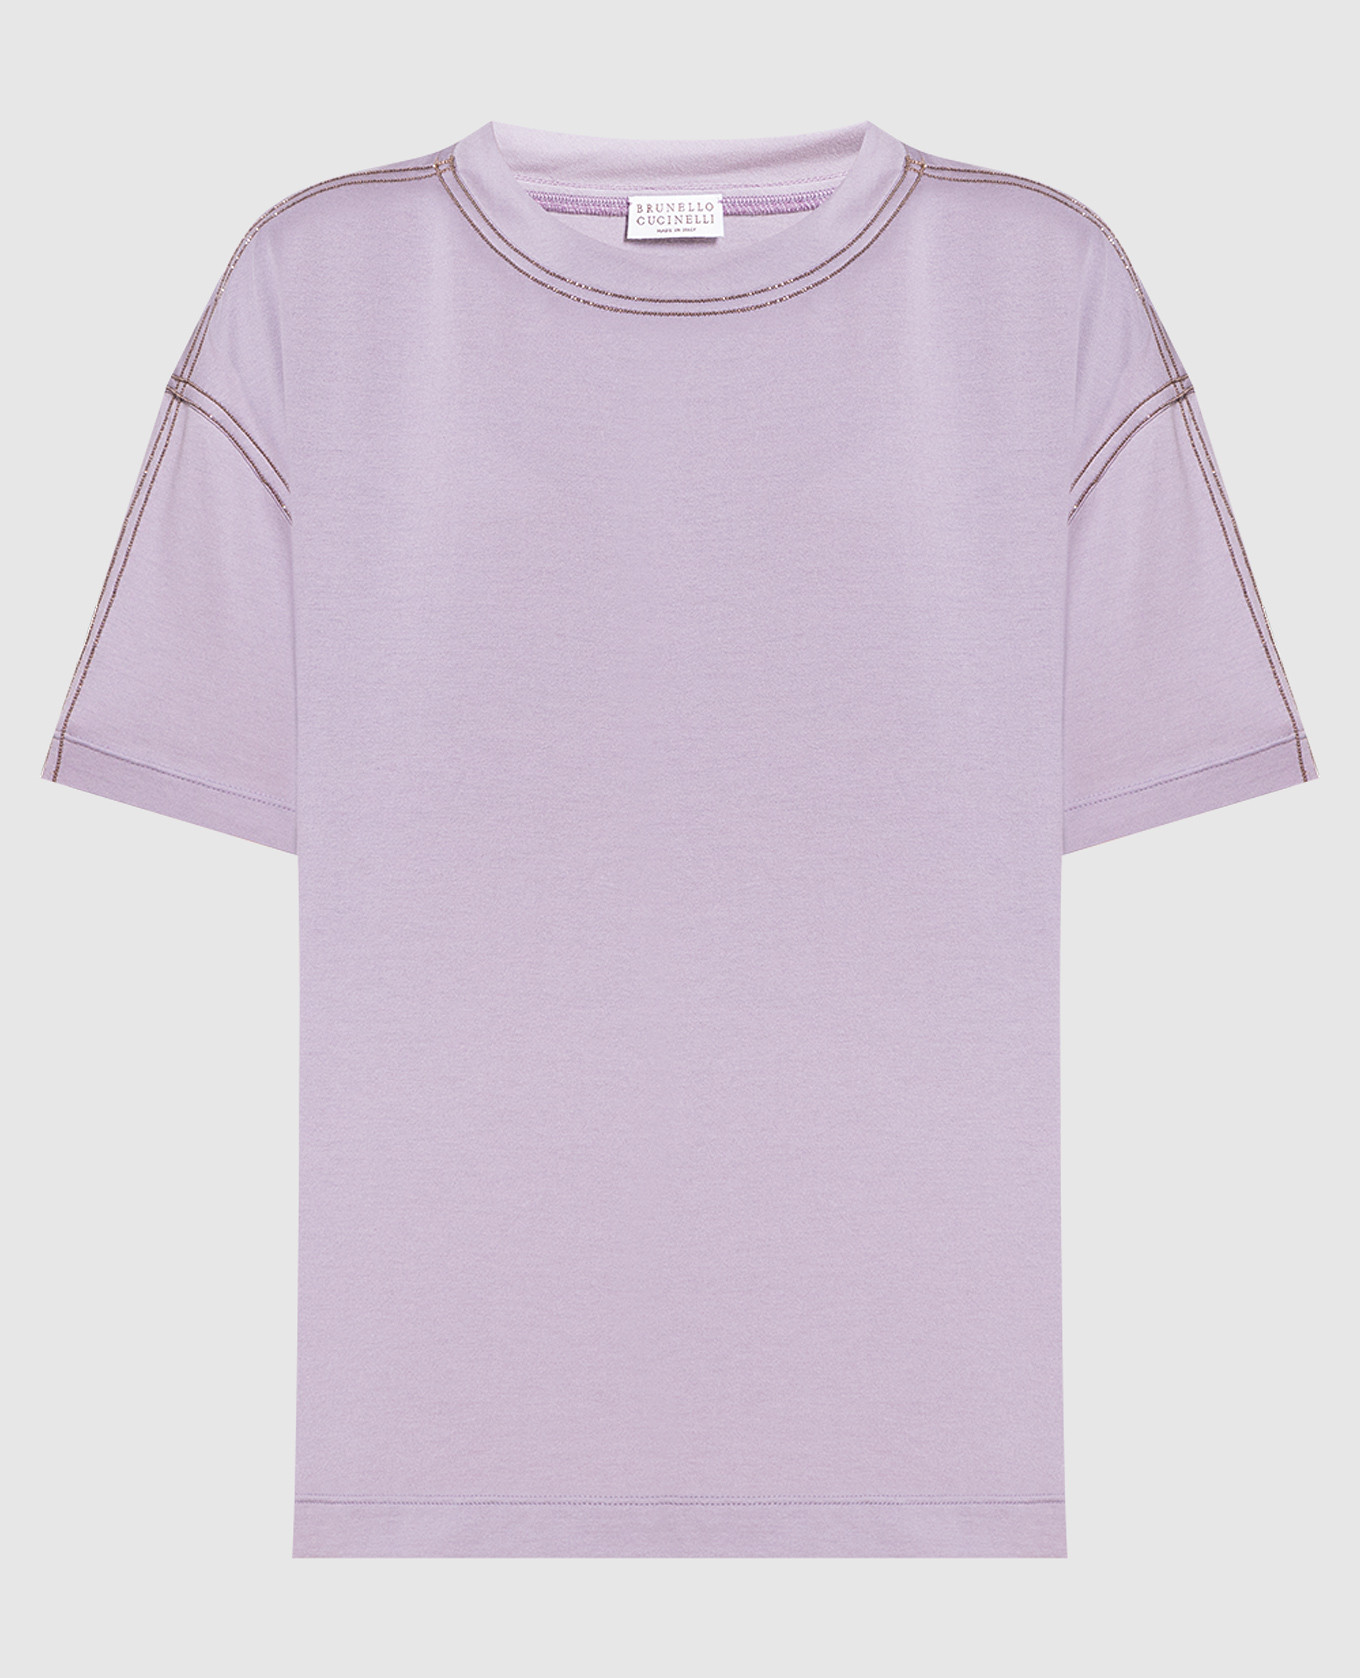 Purple t-shirt with monil chain